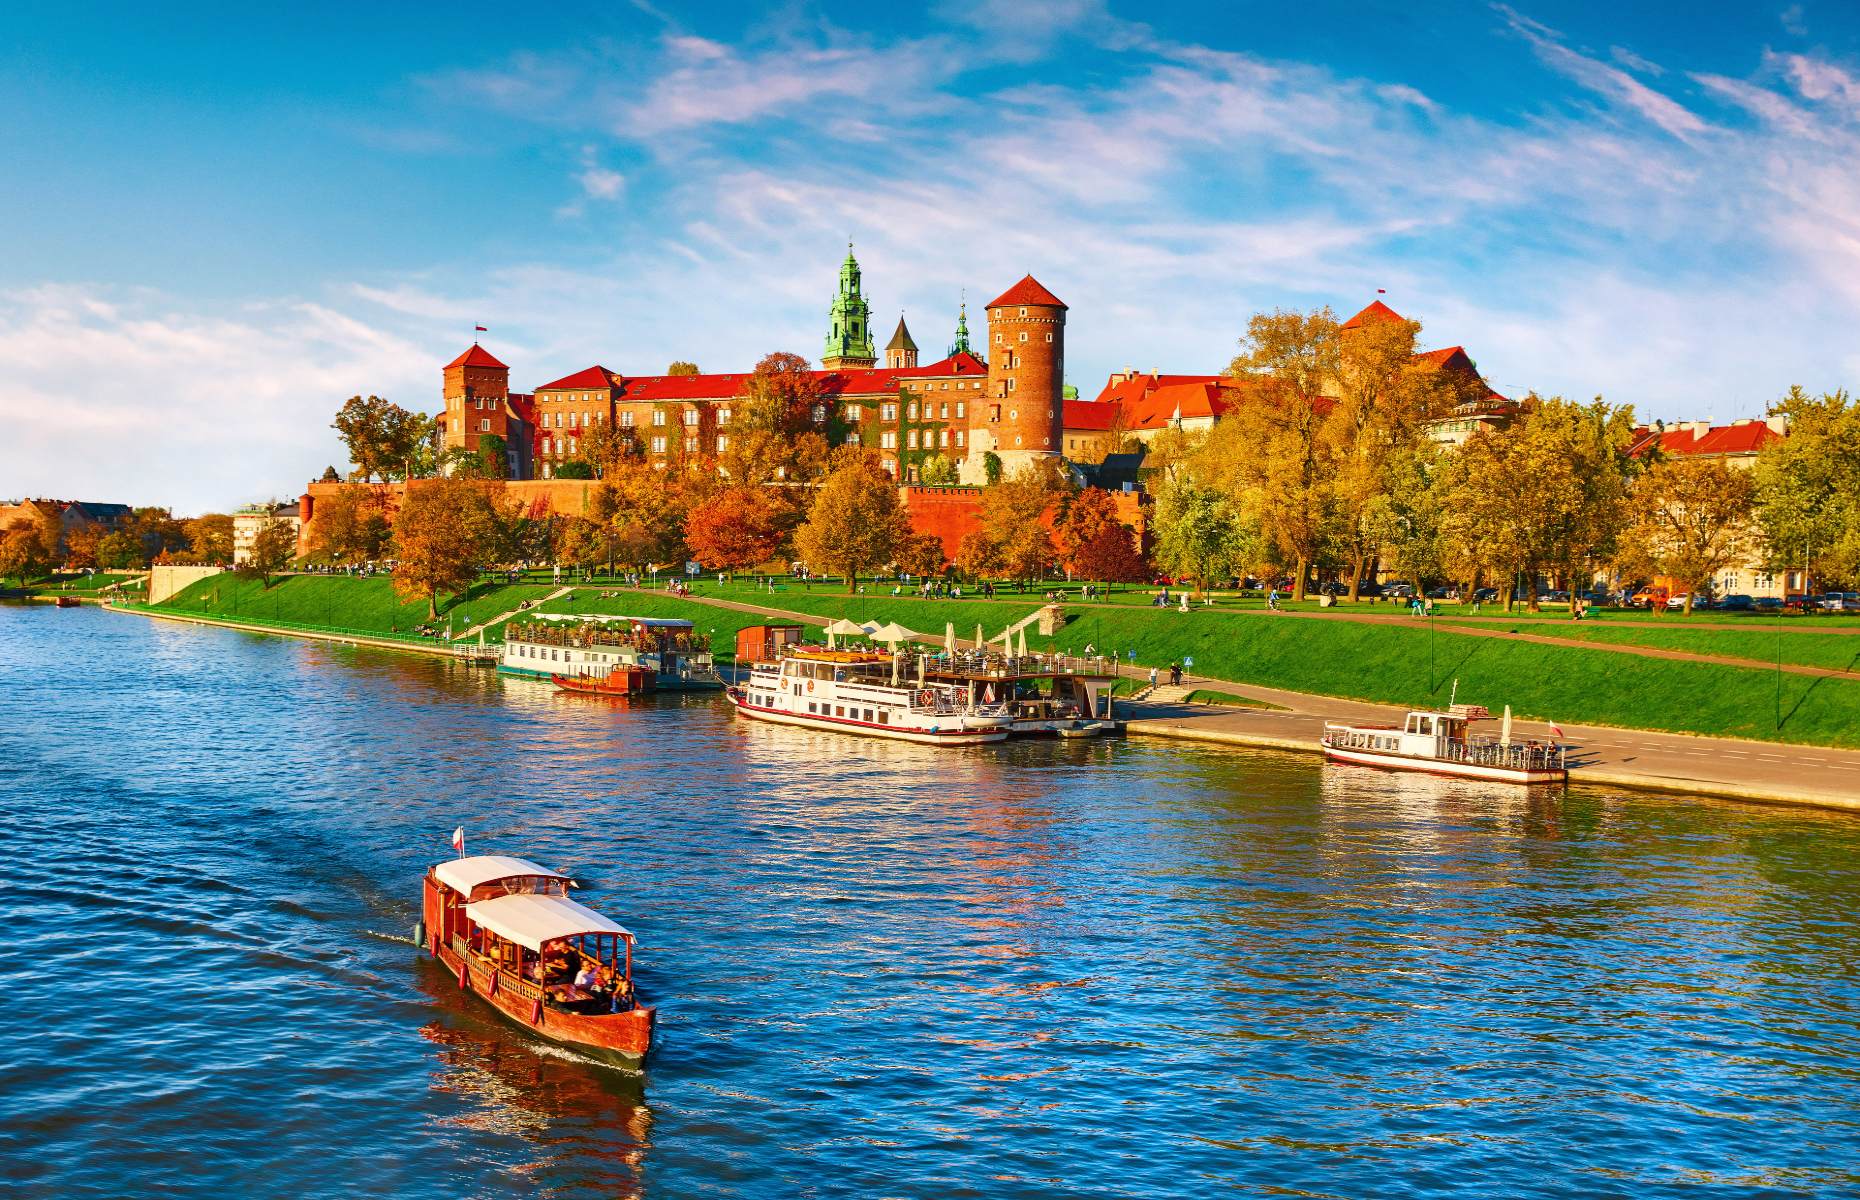 Krakow in autumn (Image: Yasonya/Shutterstock)